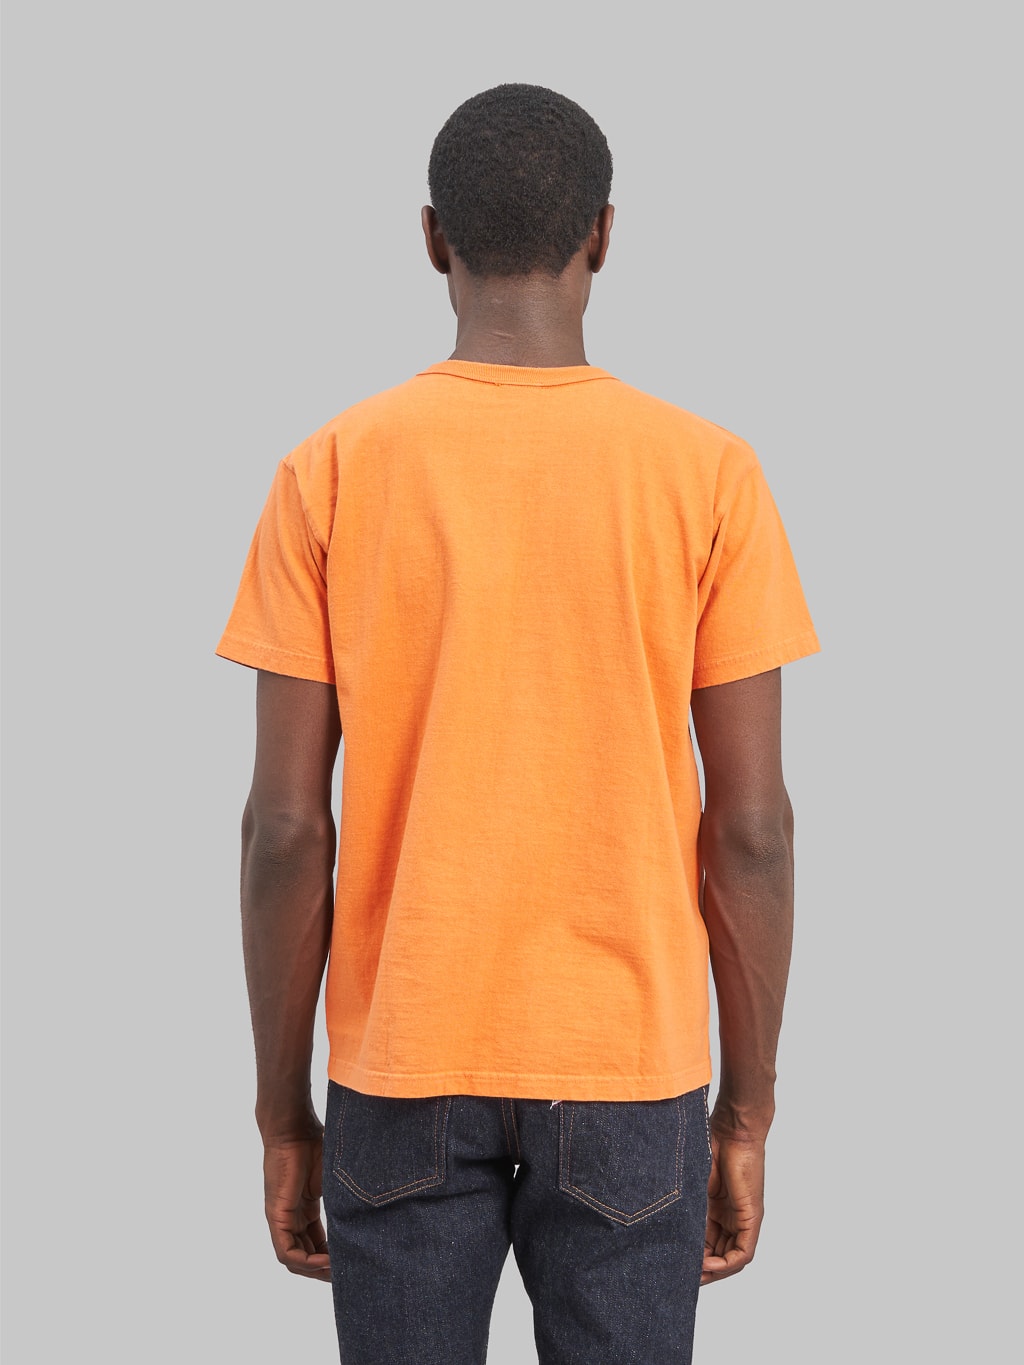 Samurai jeans solid plain heavyweight tshirt orange model back fit